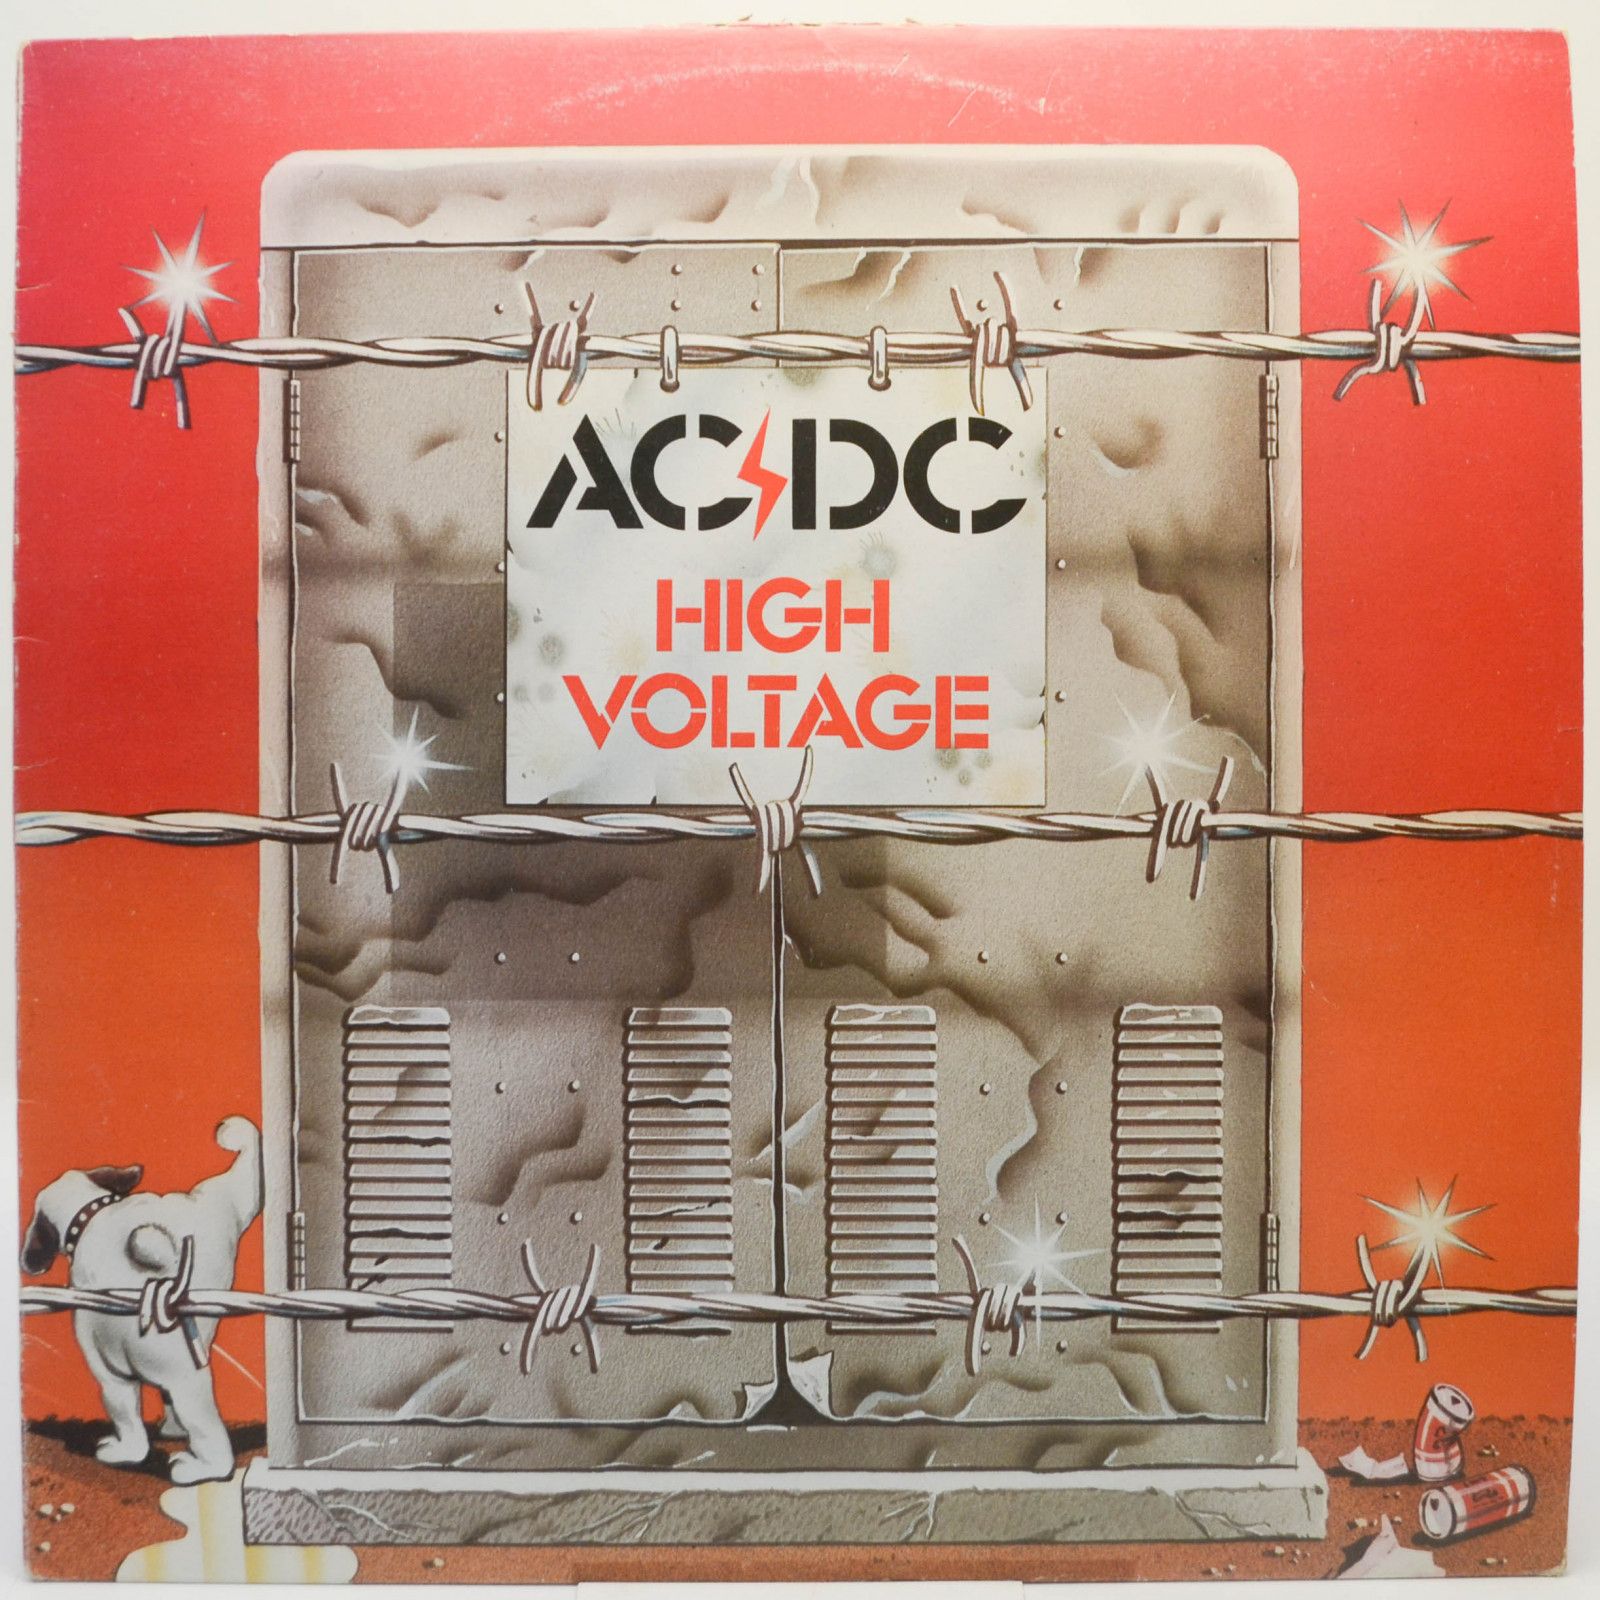 AC/DC — High Voltage (Australia), 1975